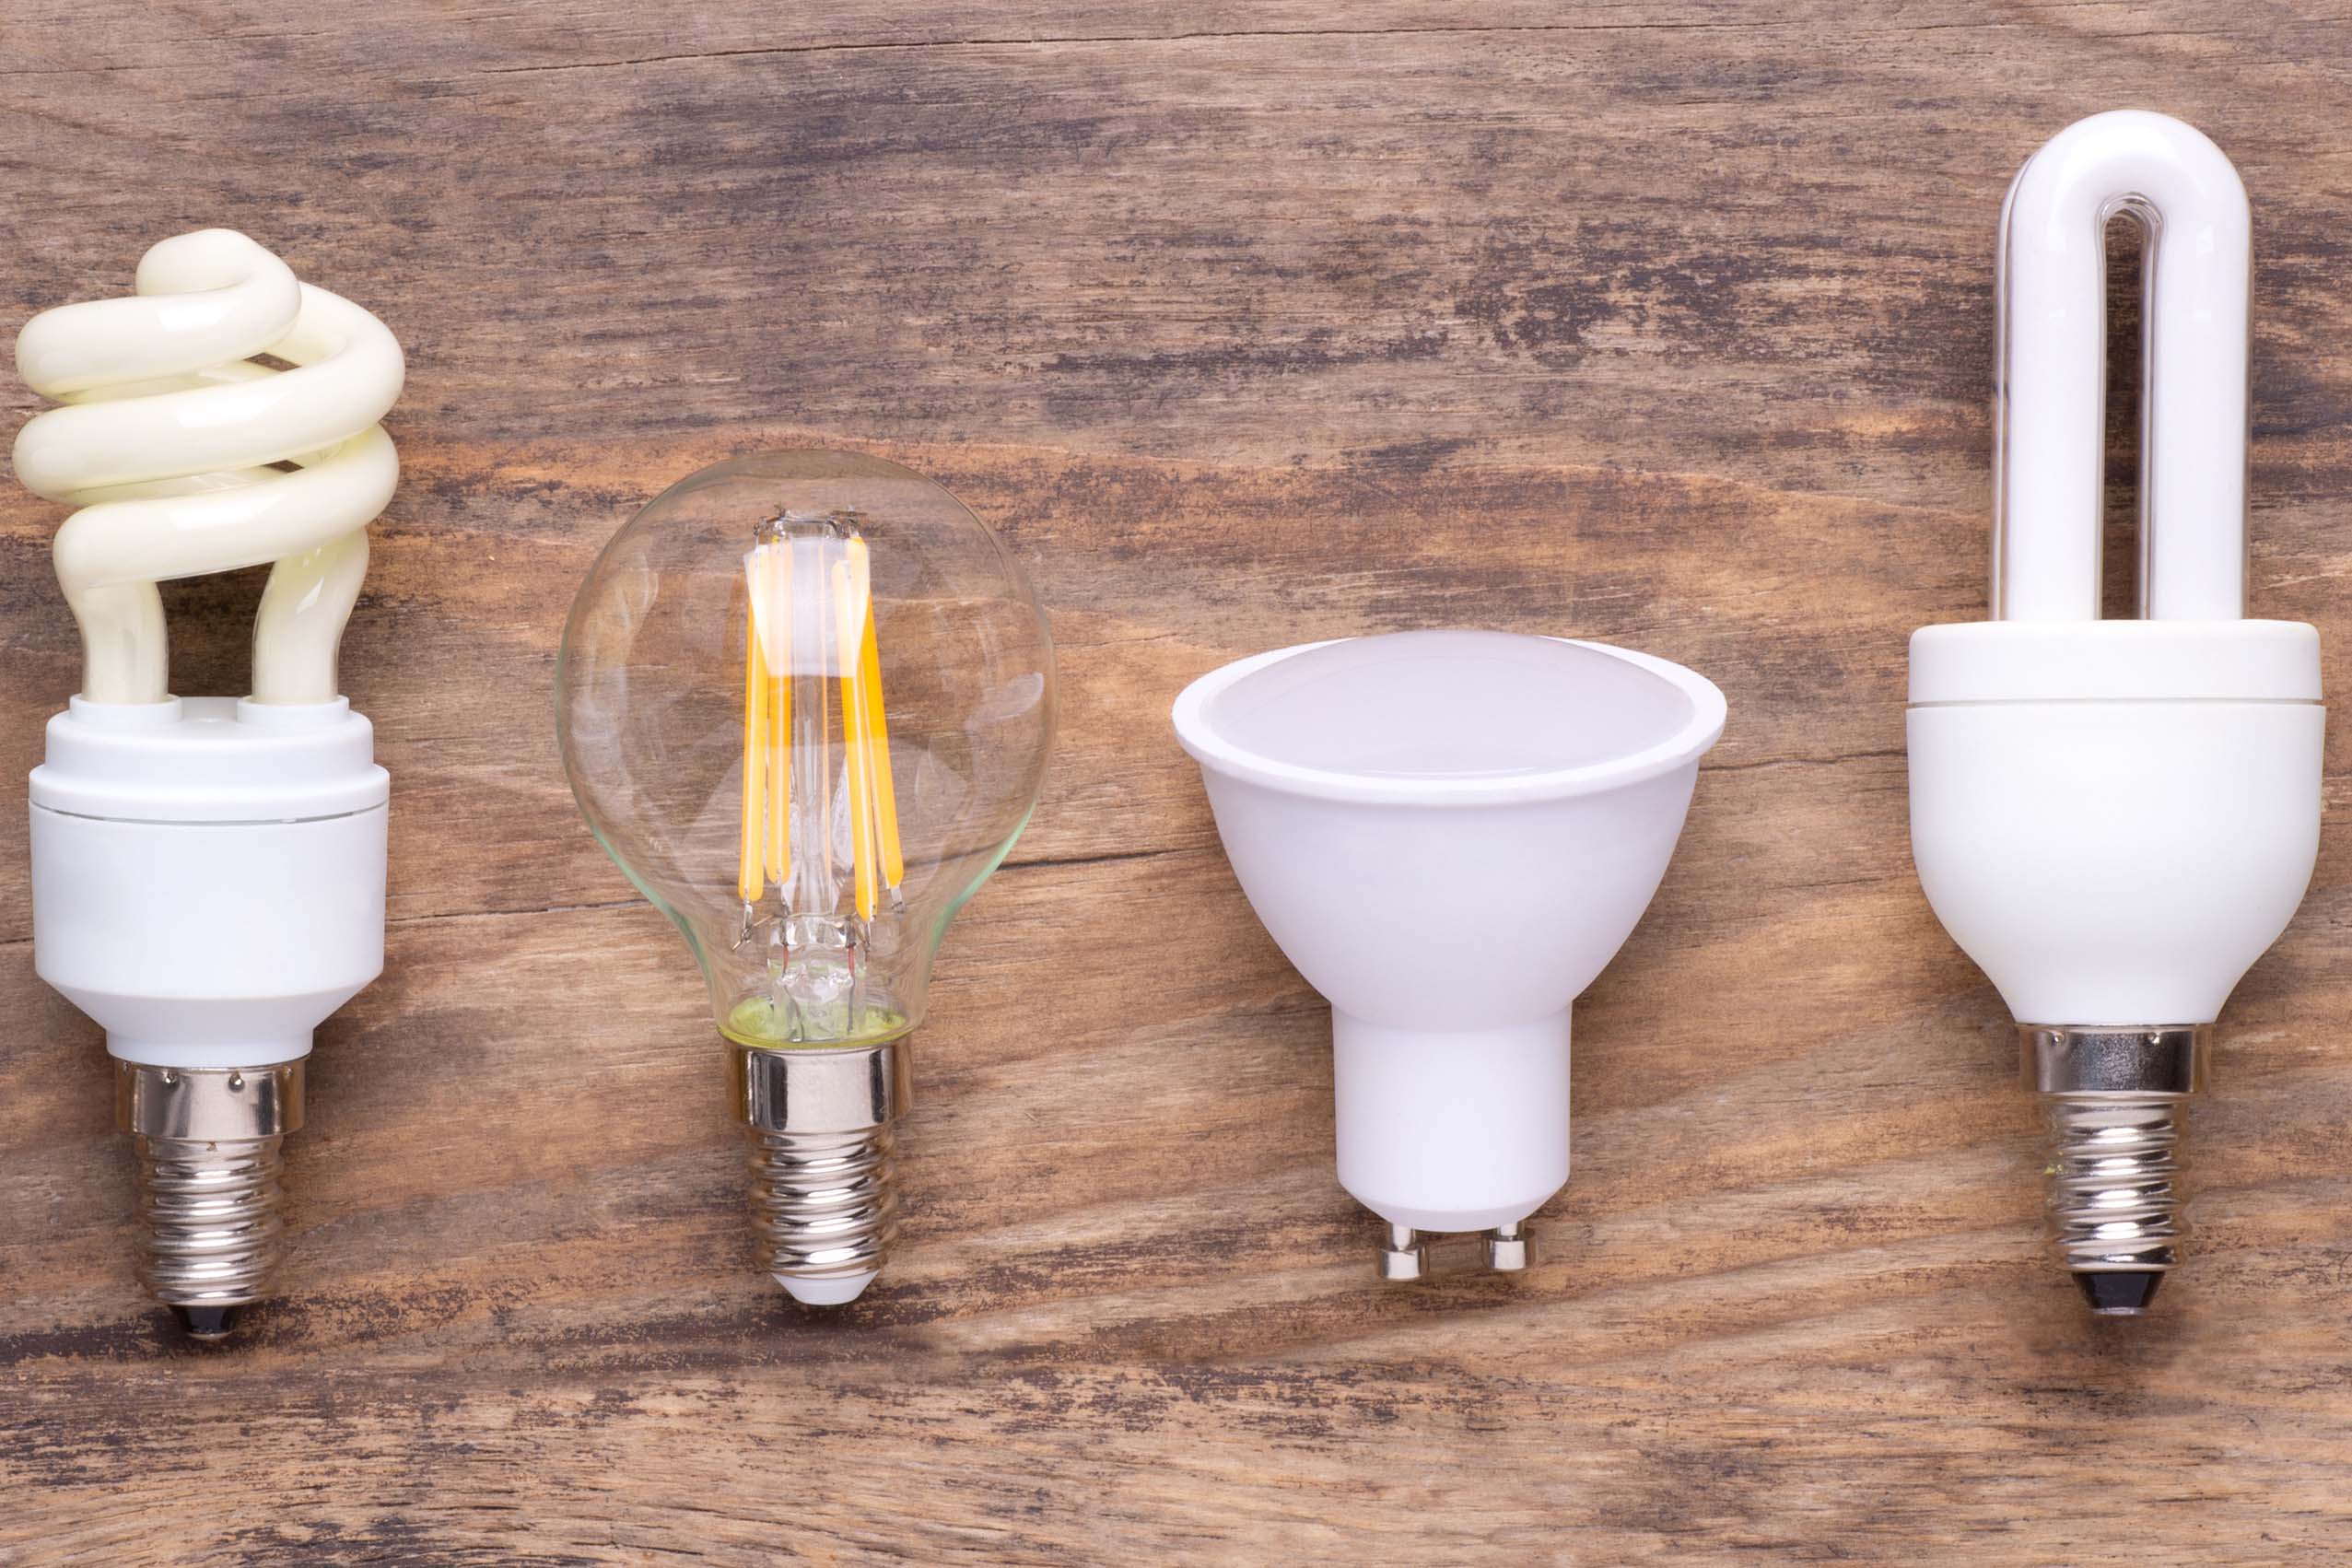 Learn about lumen, light bulb types